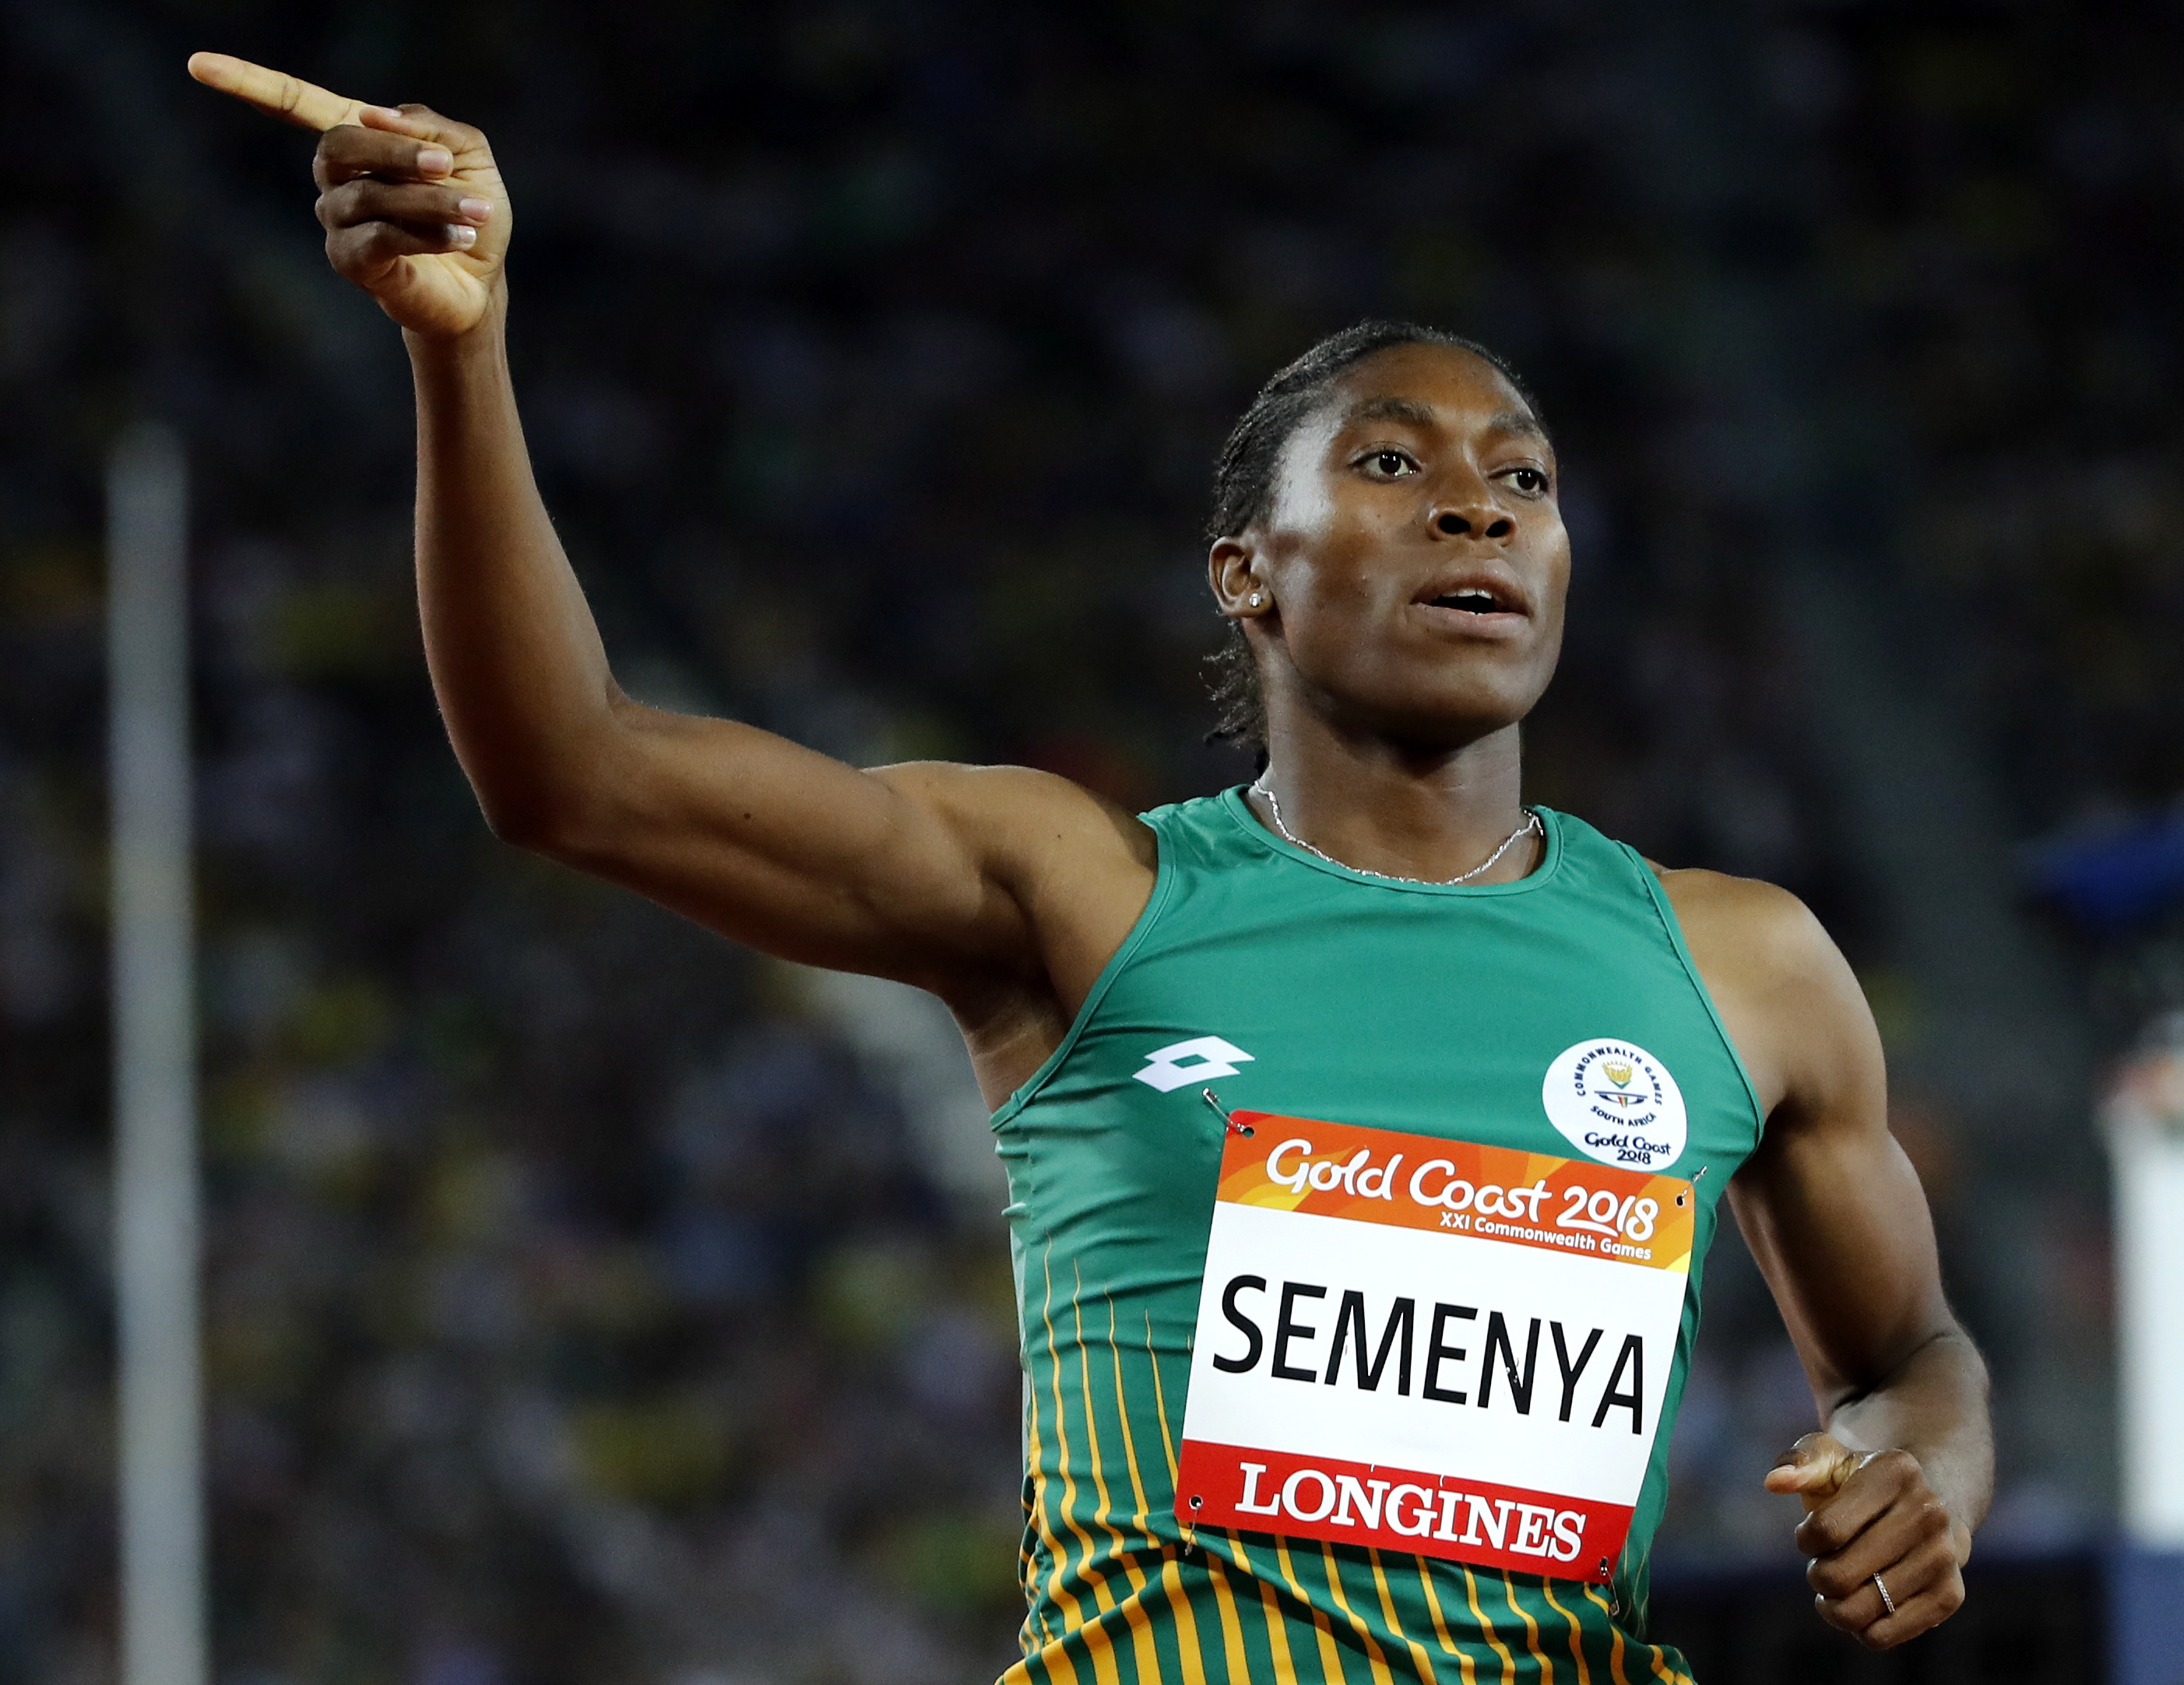 Olympic runner Caster Semenya loses landmark legal case against IAAF testosterone rules